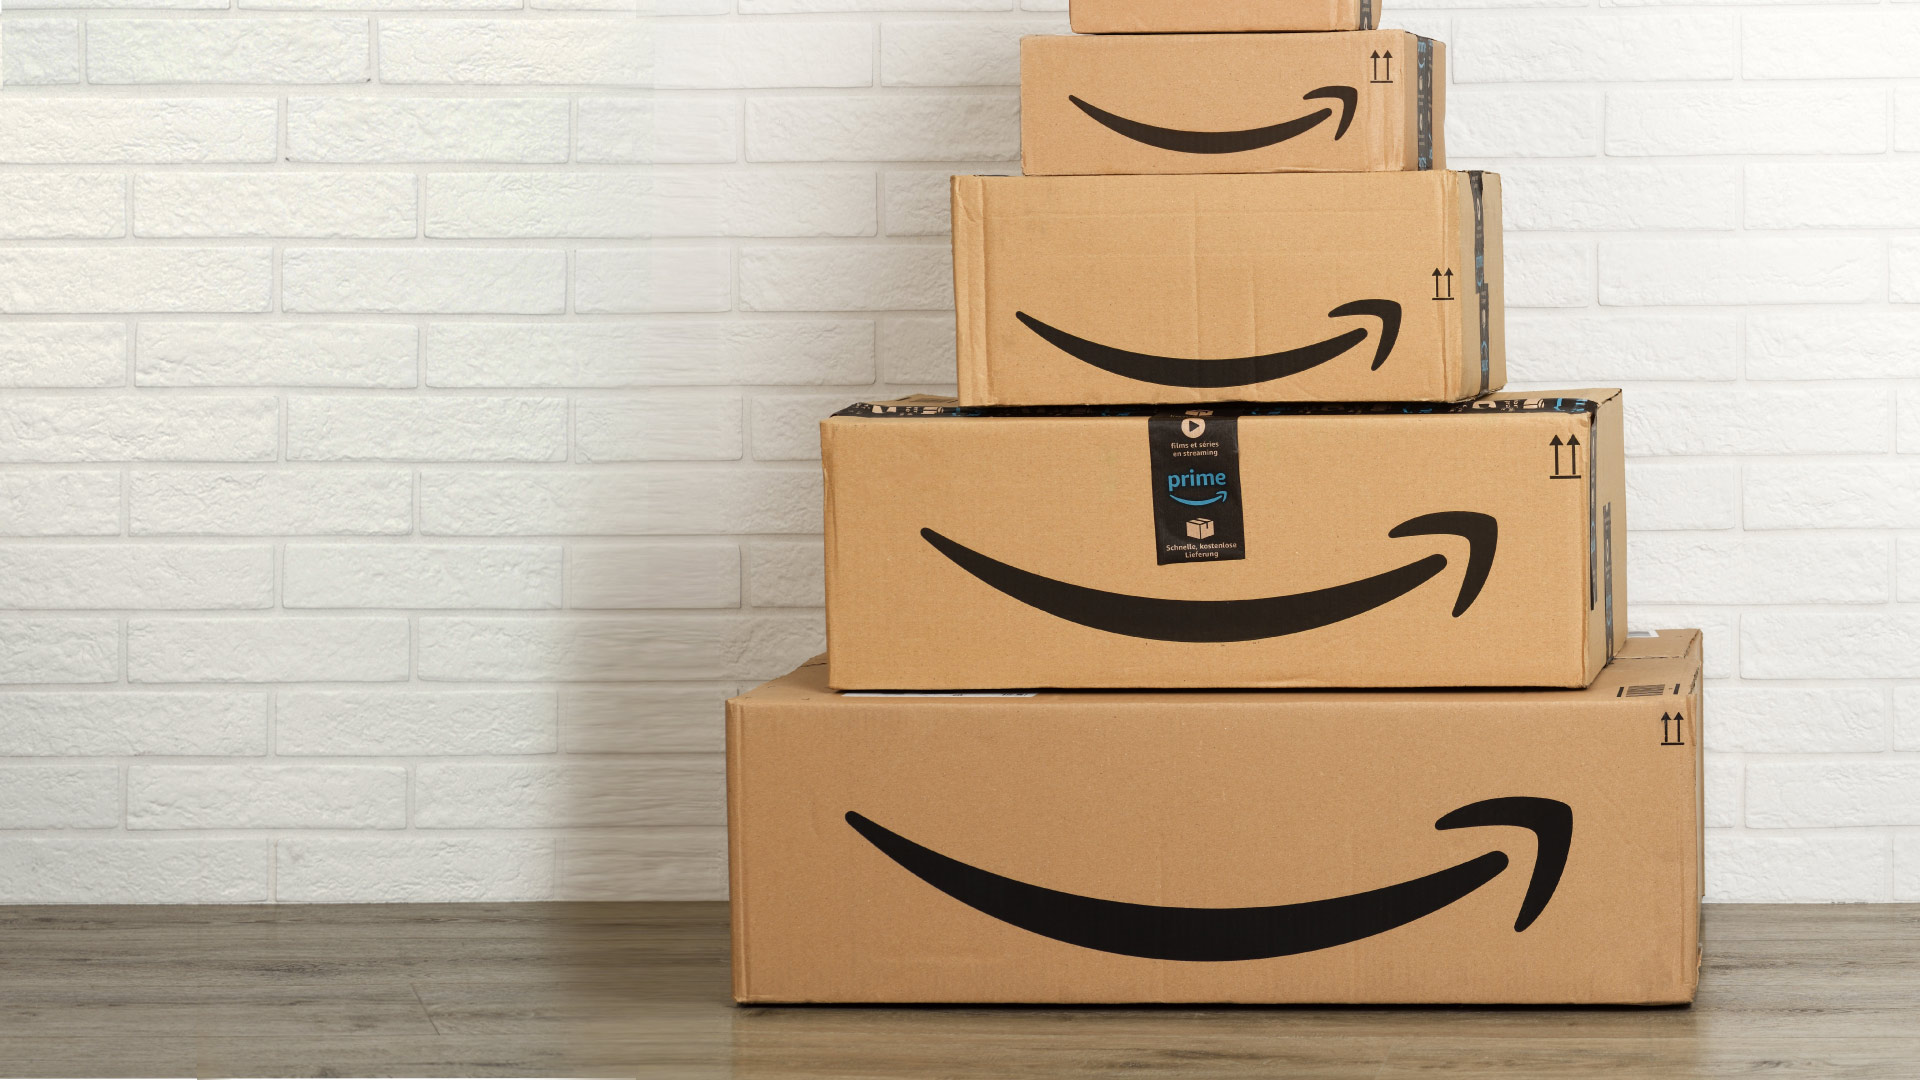 Stacked Amazon boxes